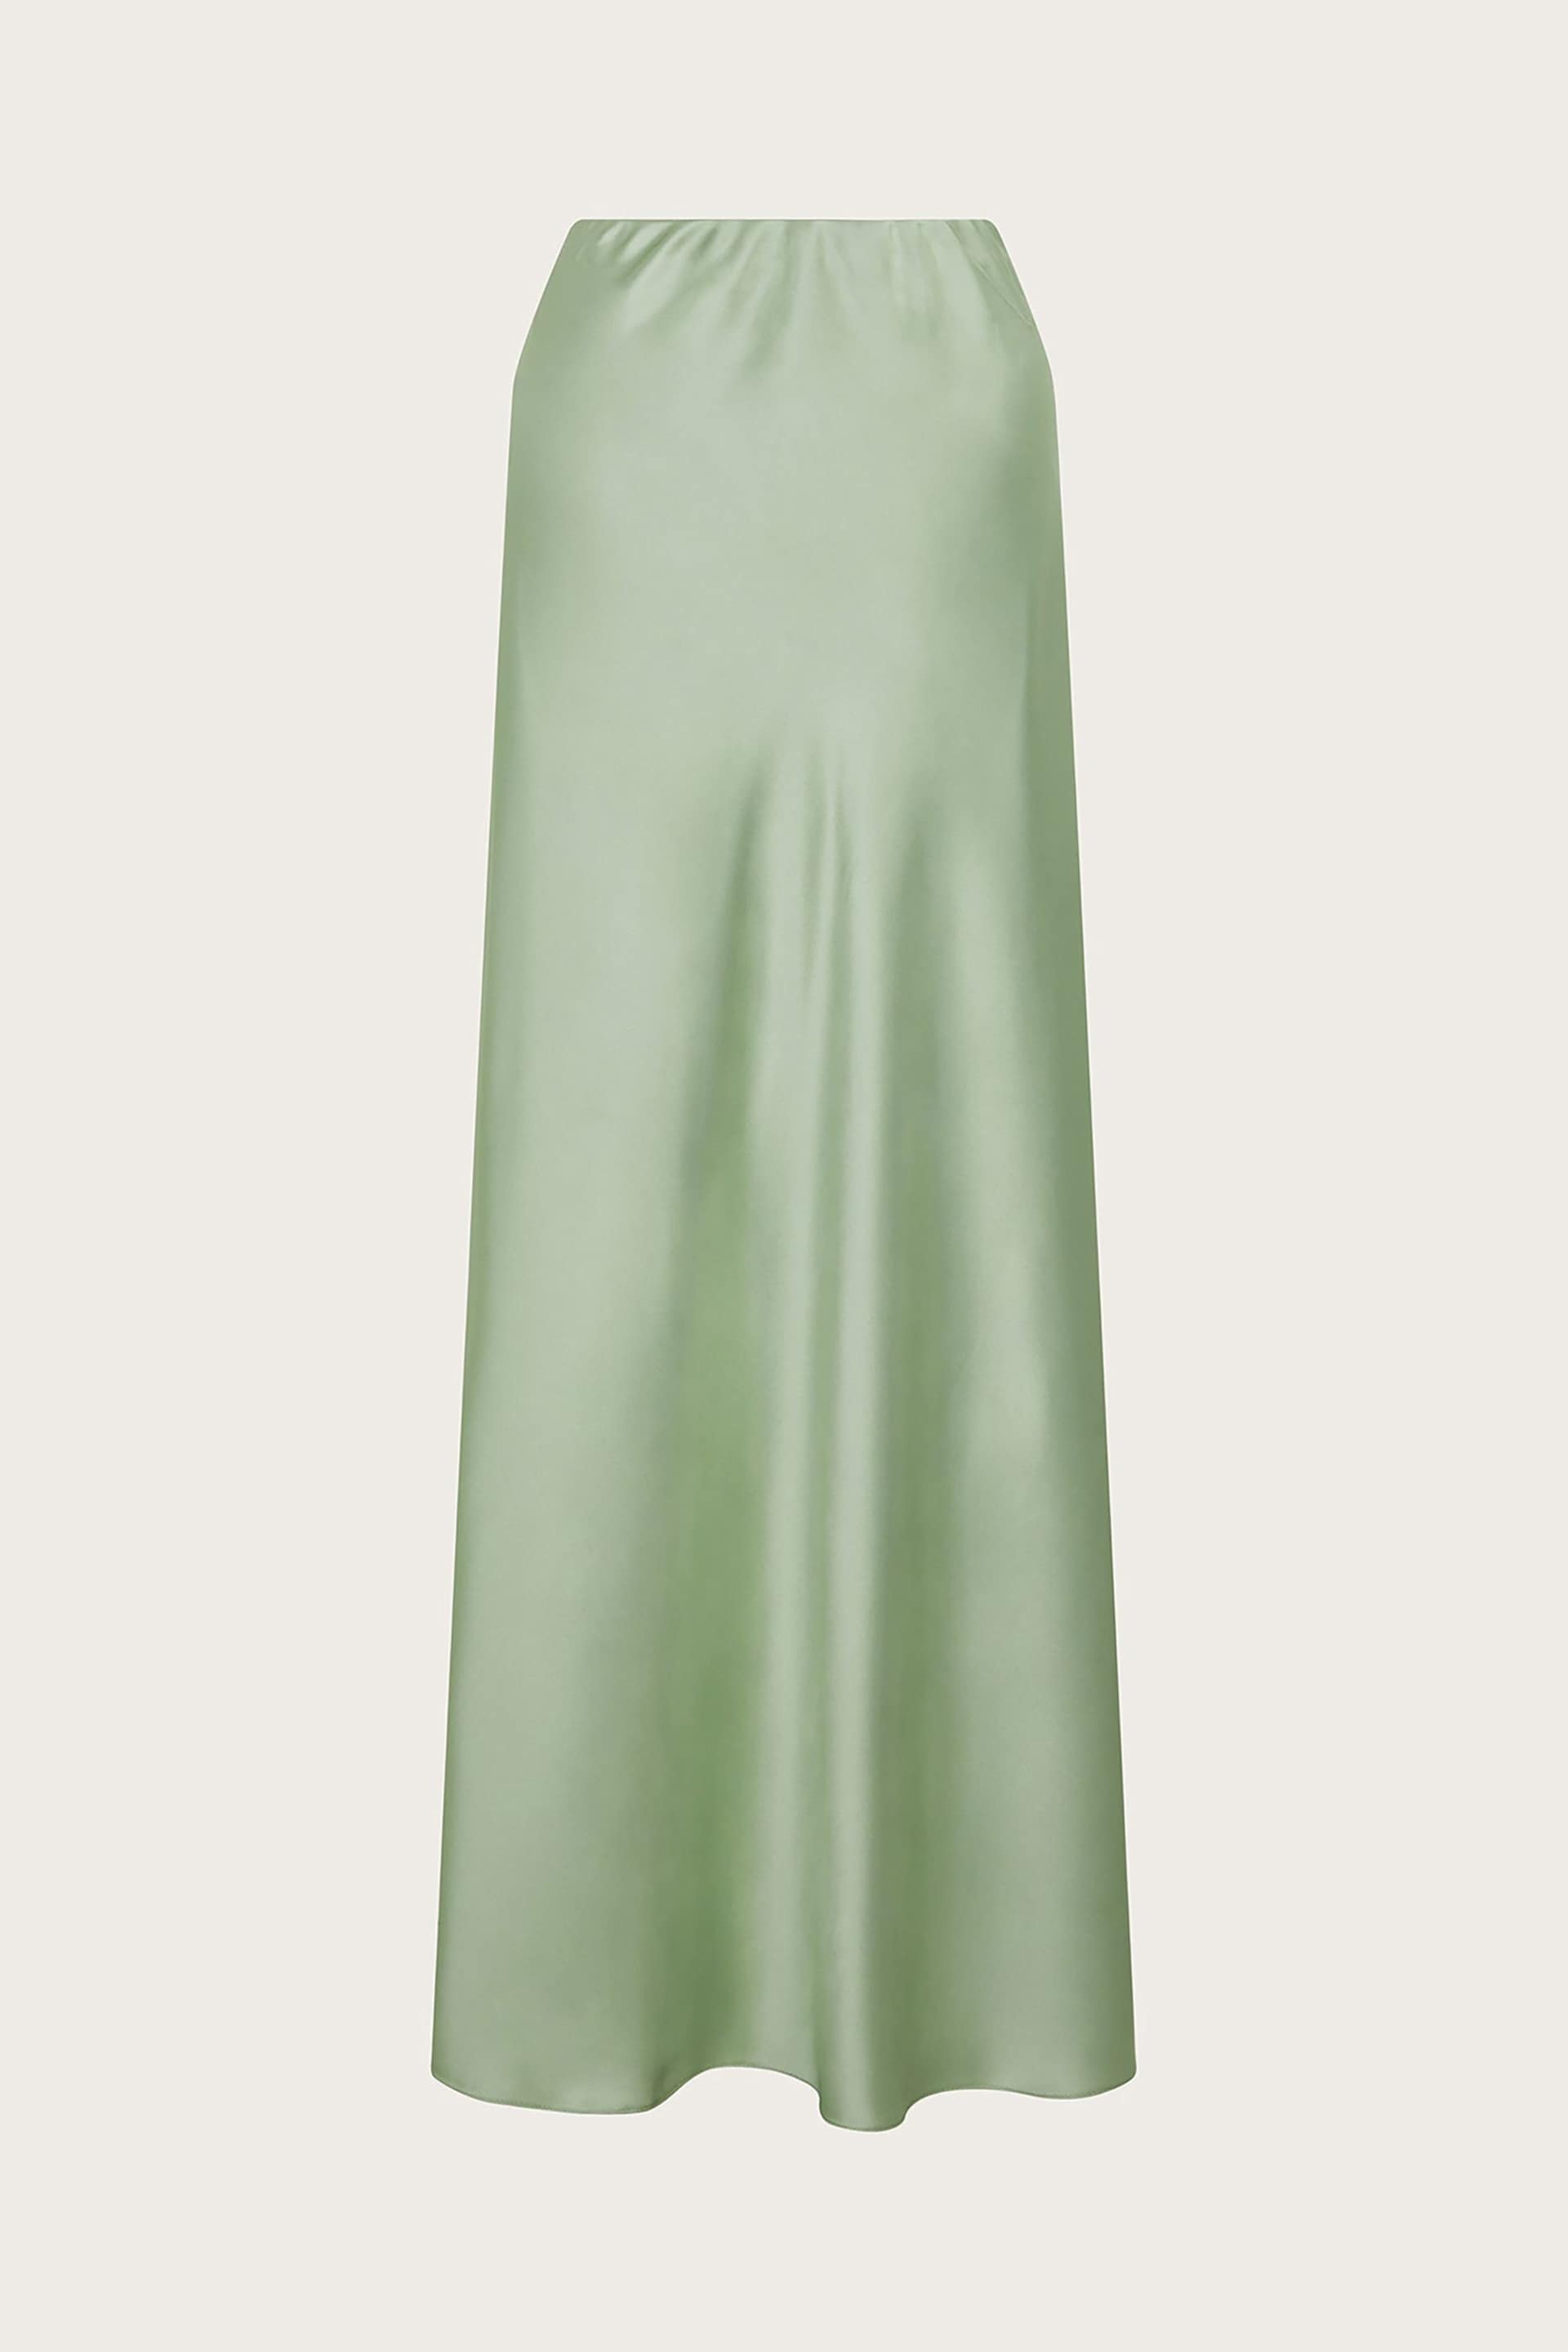 Monsoon Green Sofia Satin Maxi Skirt - Image 4 of 4